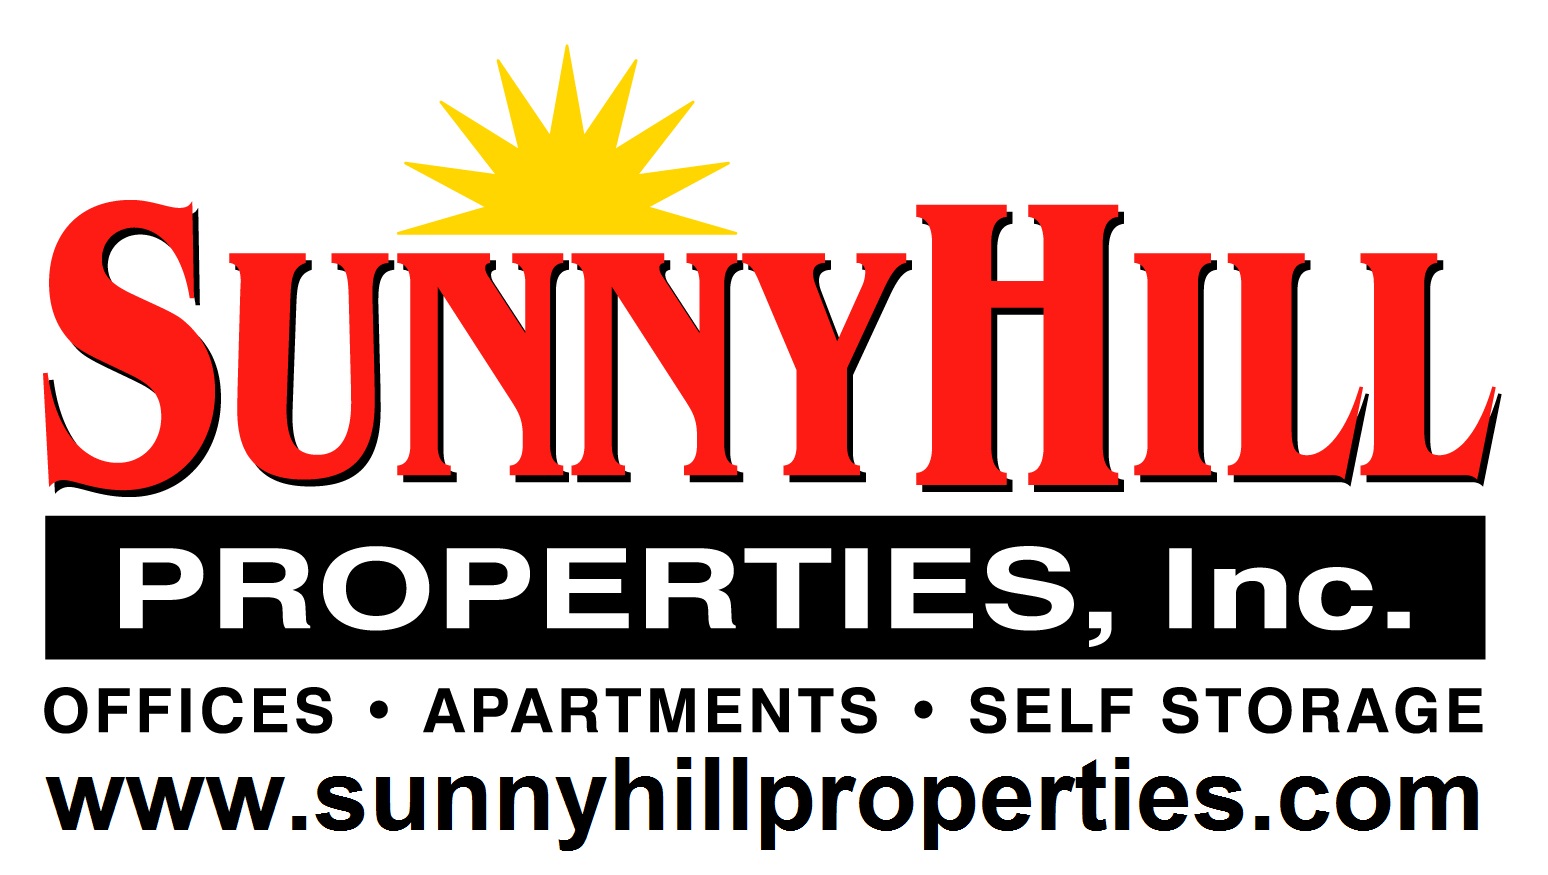 Sunnyhill Properties